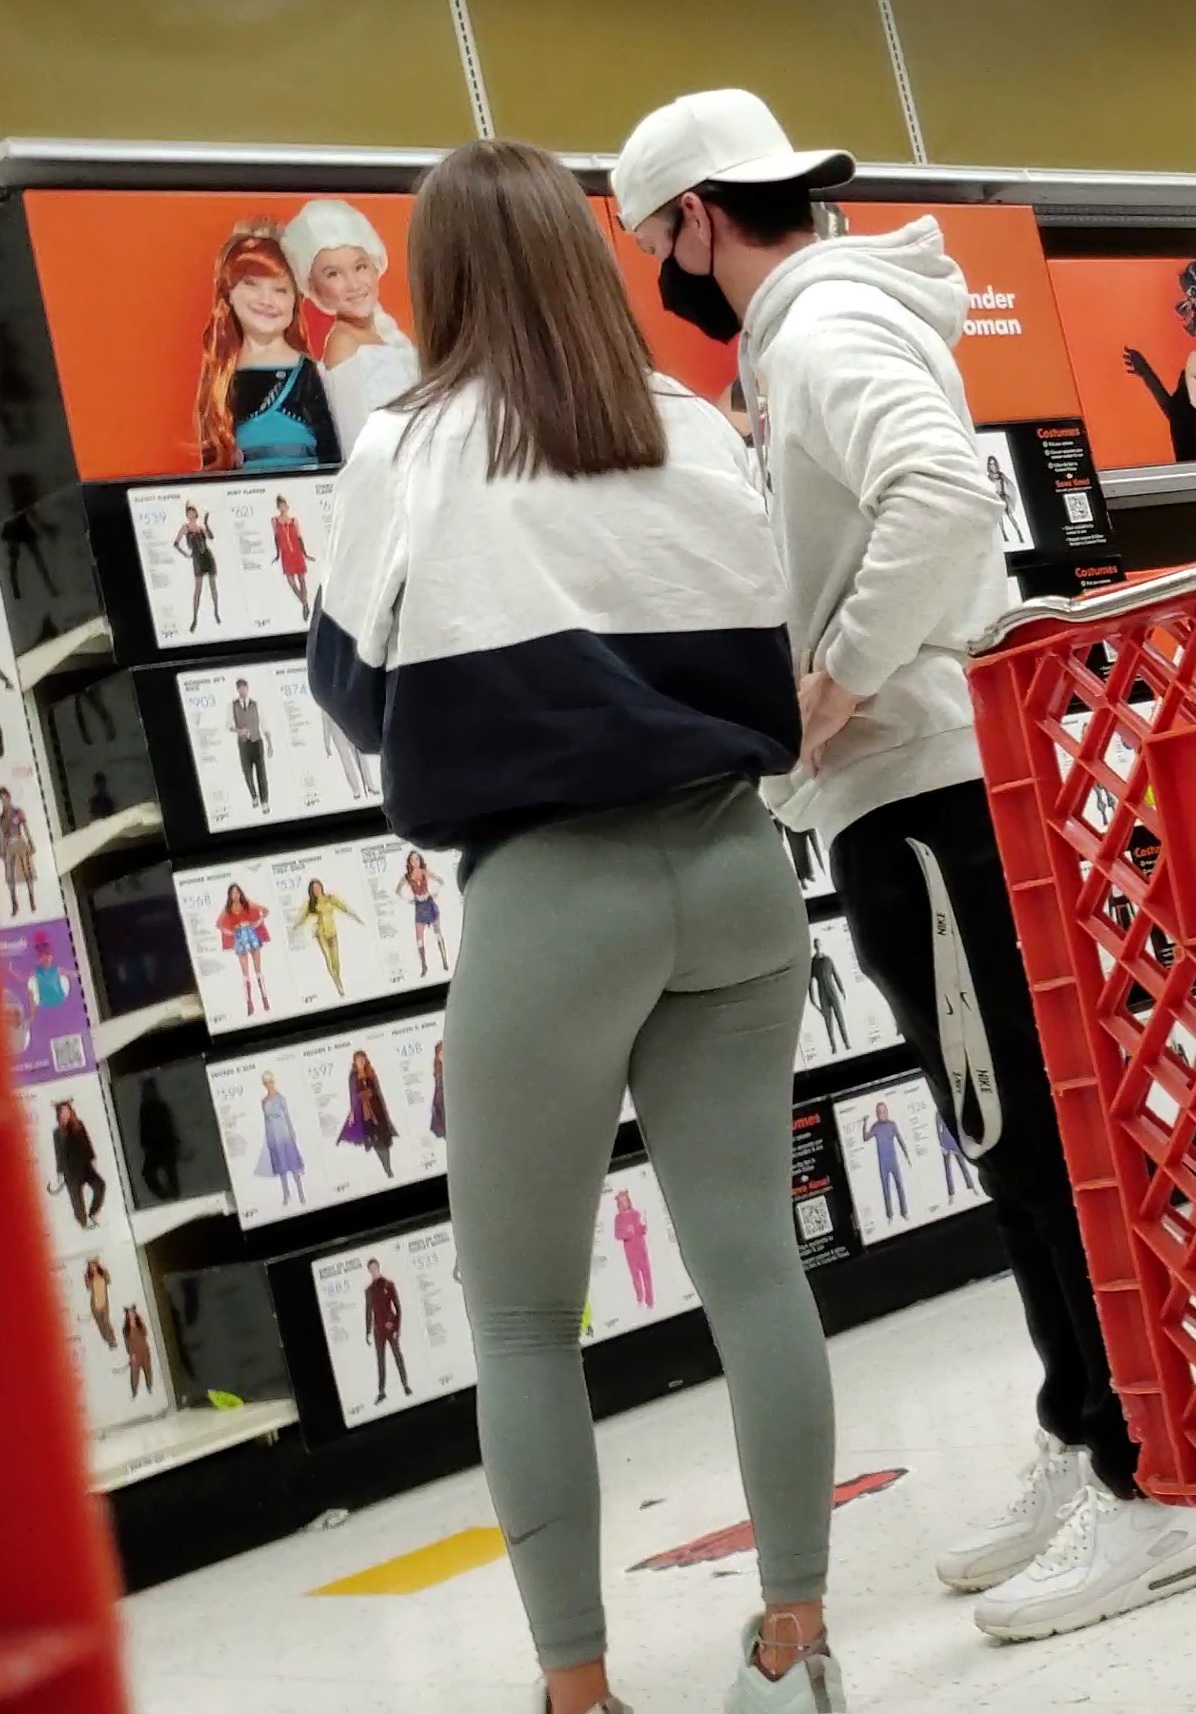 Must see gray yoga pants perfect bubble butt vtl. OC from last Halloween  shopping - Spandex, Leggings & Yoga Pants - Forum